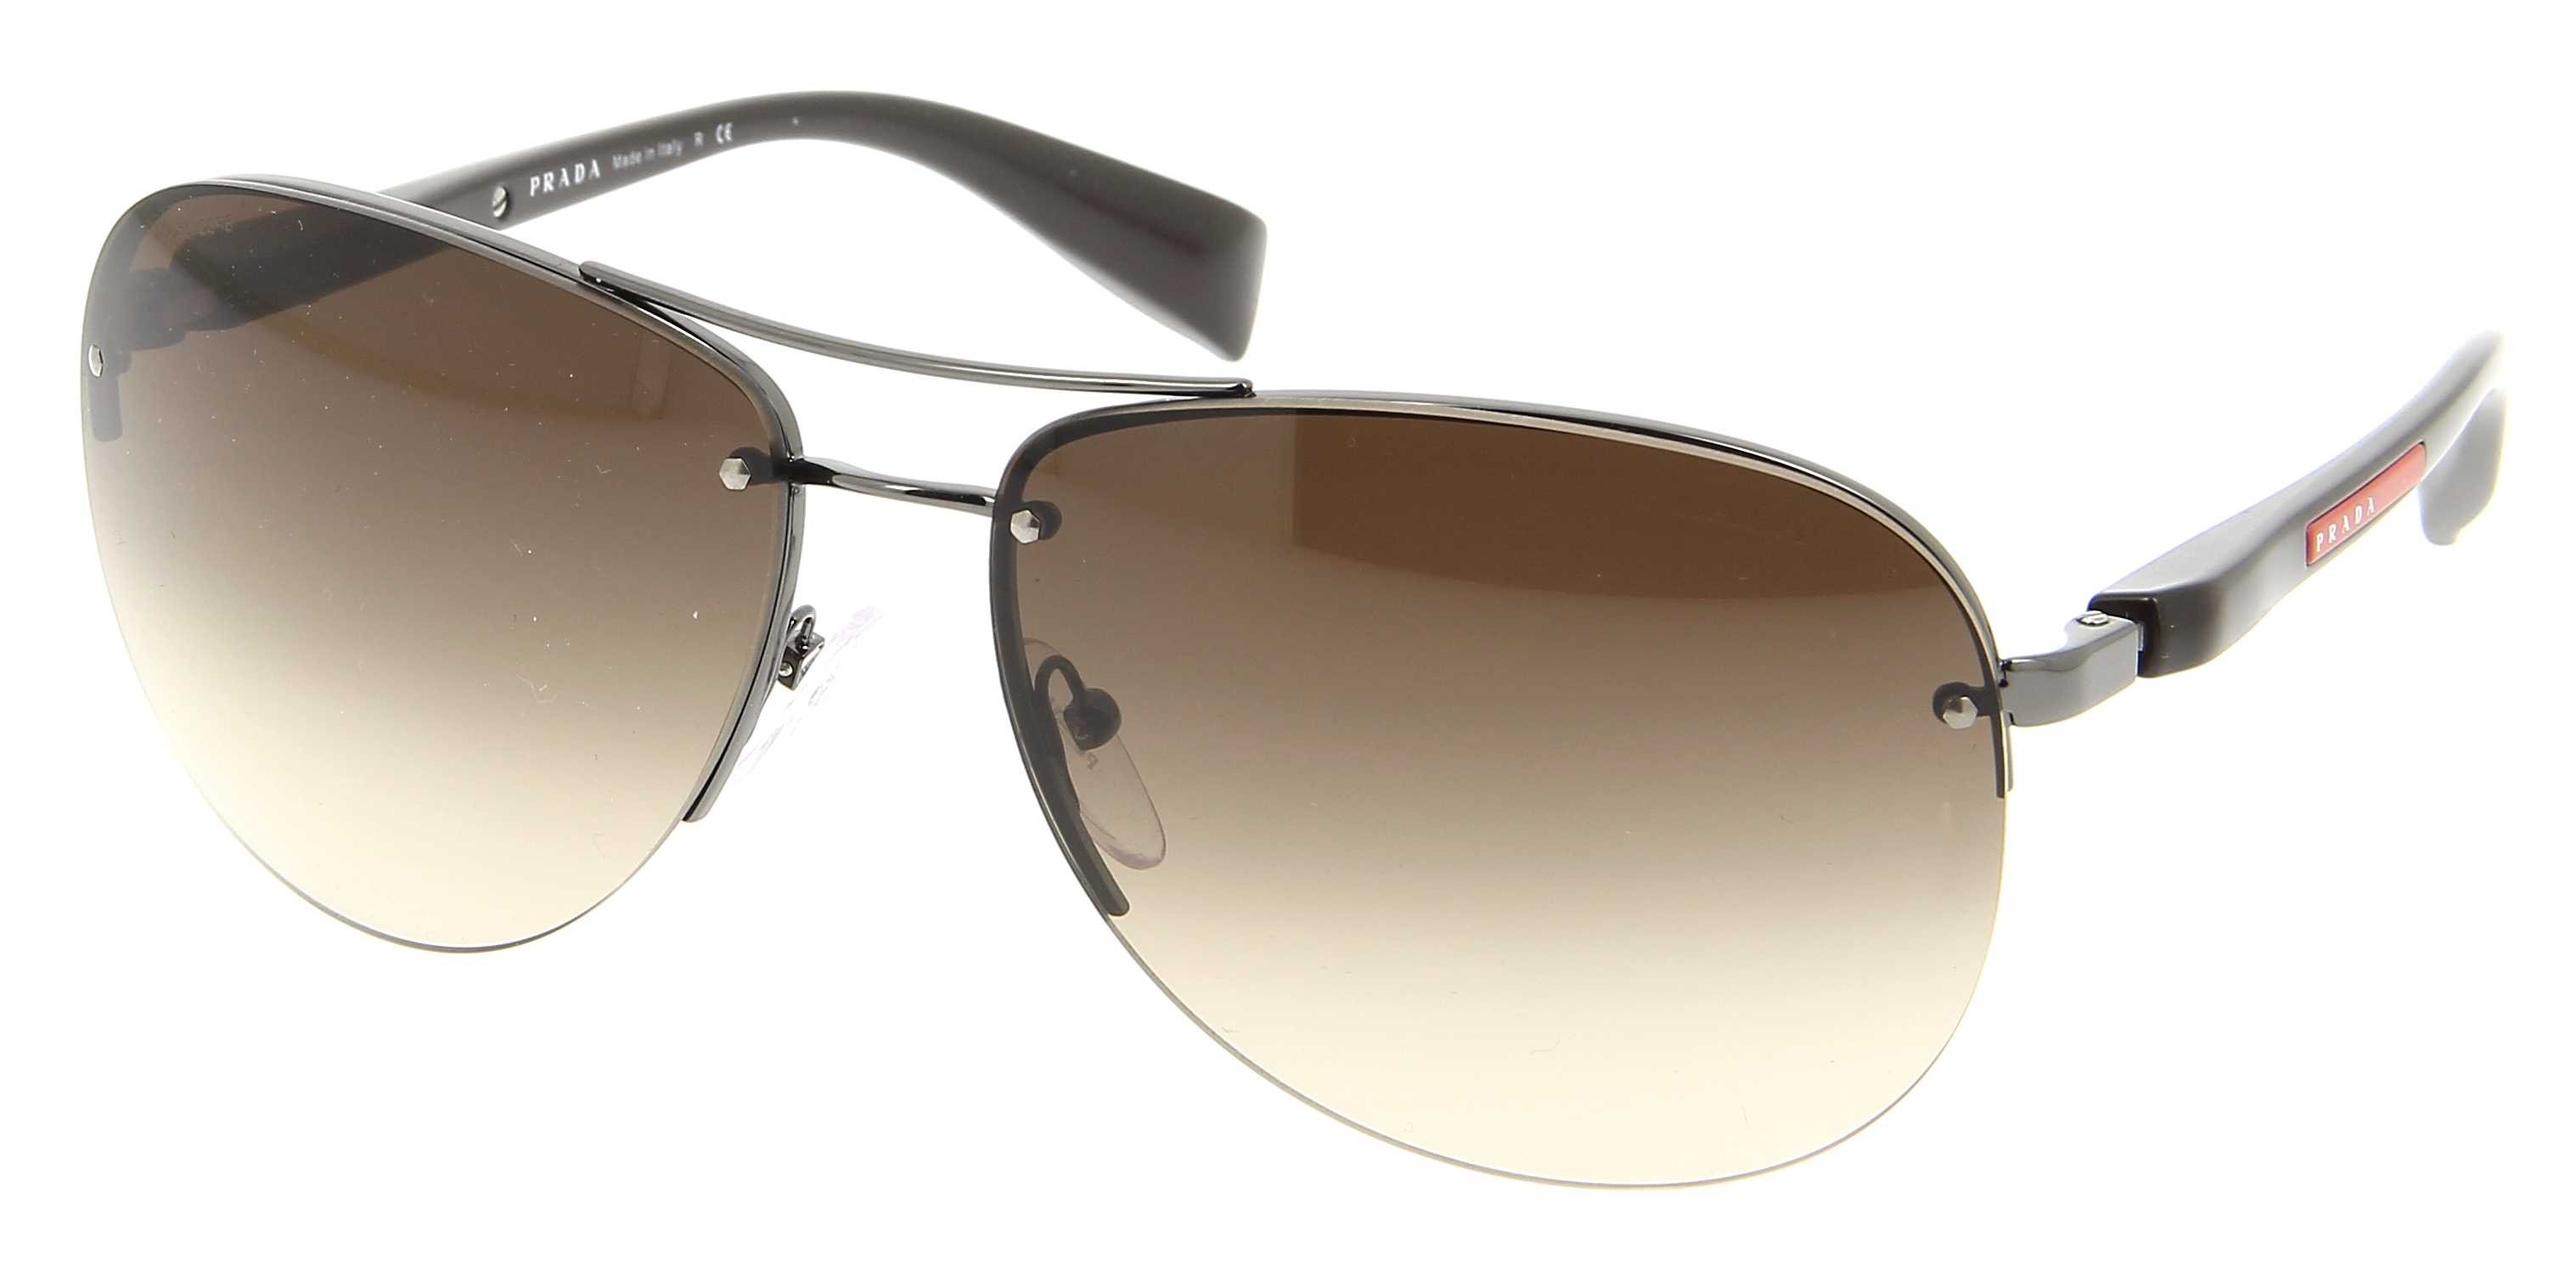 Sunglasses PRADA PS 56MS 5AV6S1 65/14 Man gun Aviator frames rimless frame  Sport 65mmx14mm 199$CA